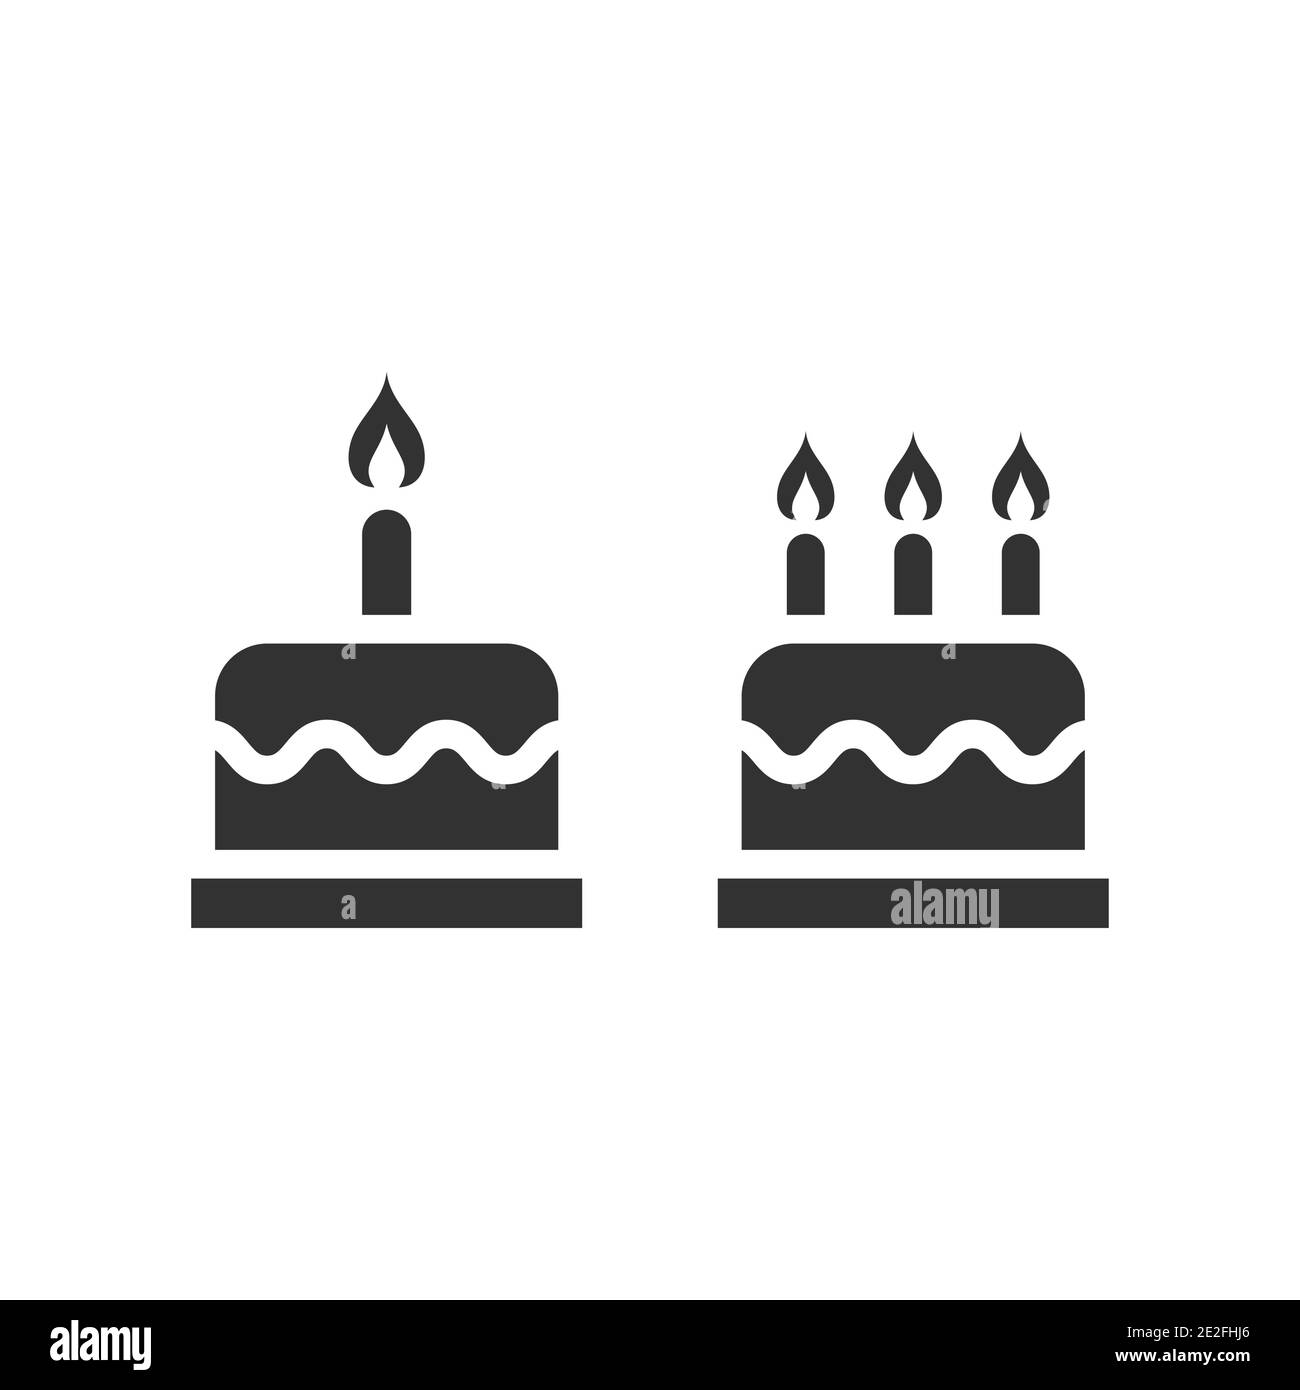 Birthday cake symbol icon design element Vector Image